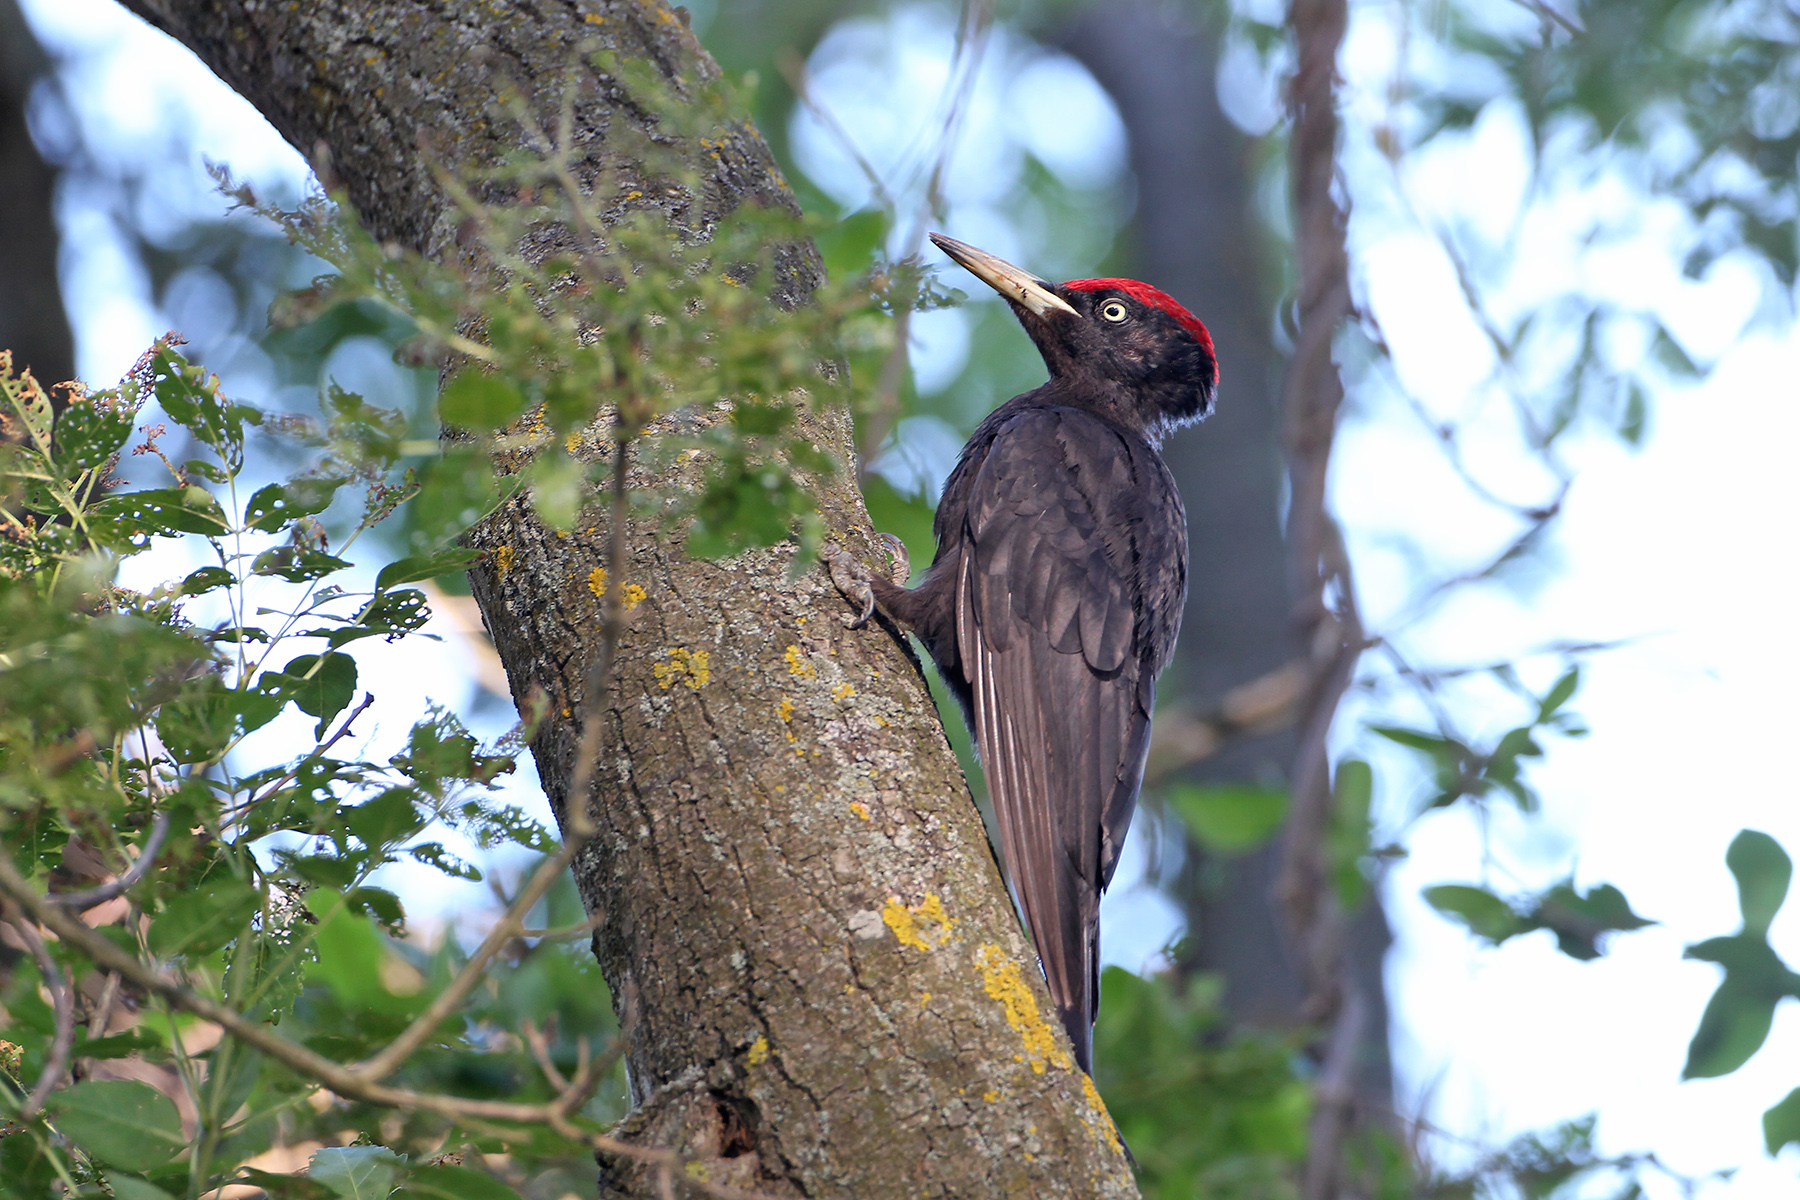 Black Woodpecker in Transylvania (image by János Oláh)